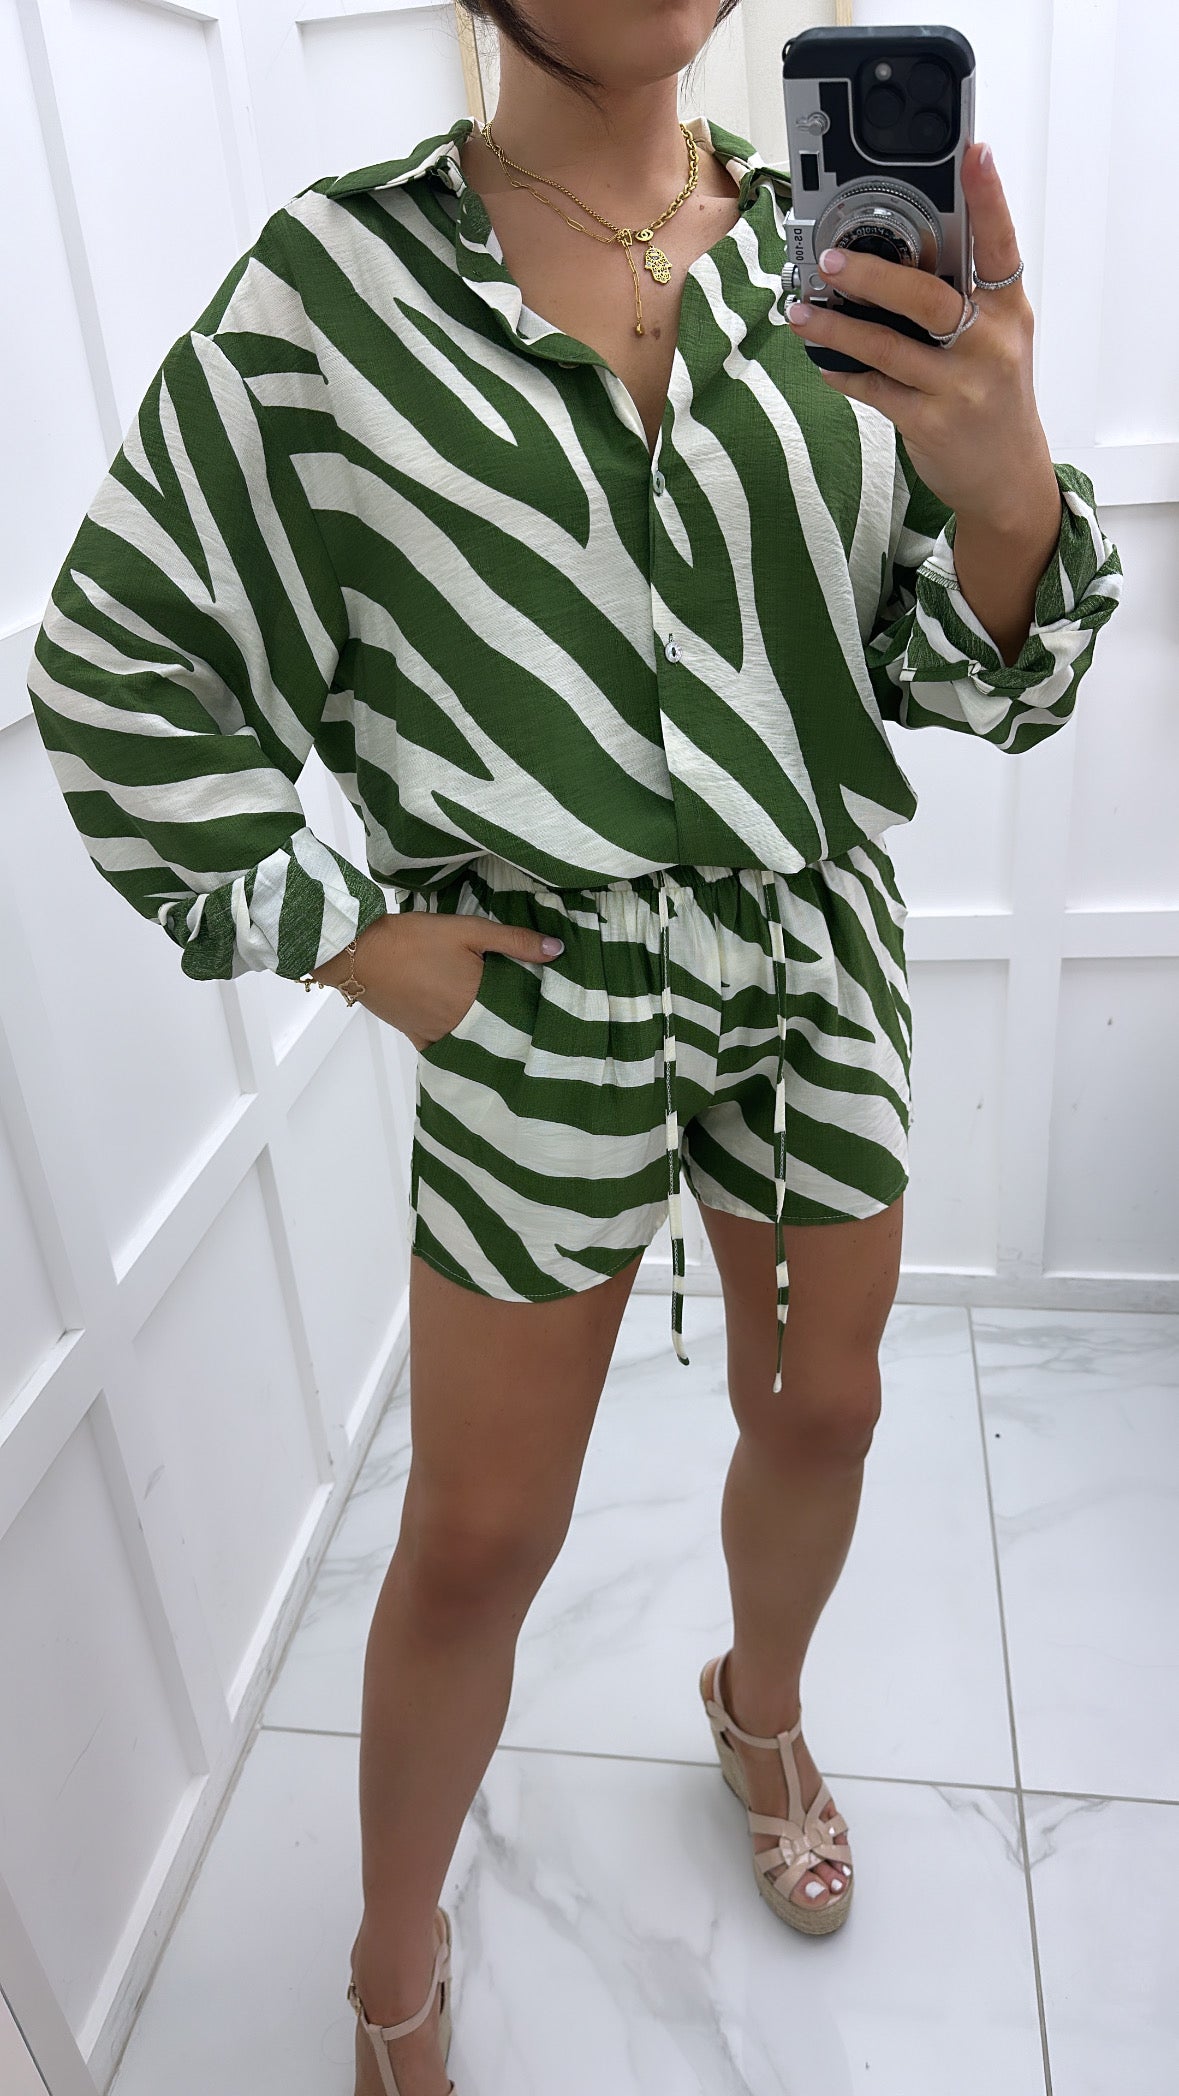 ARABELLA green zebra shirt and shorts co-ord